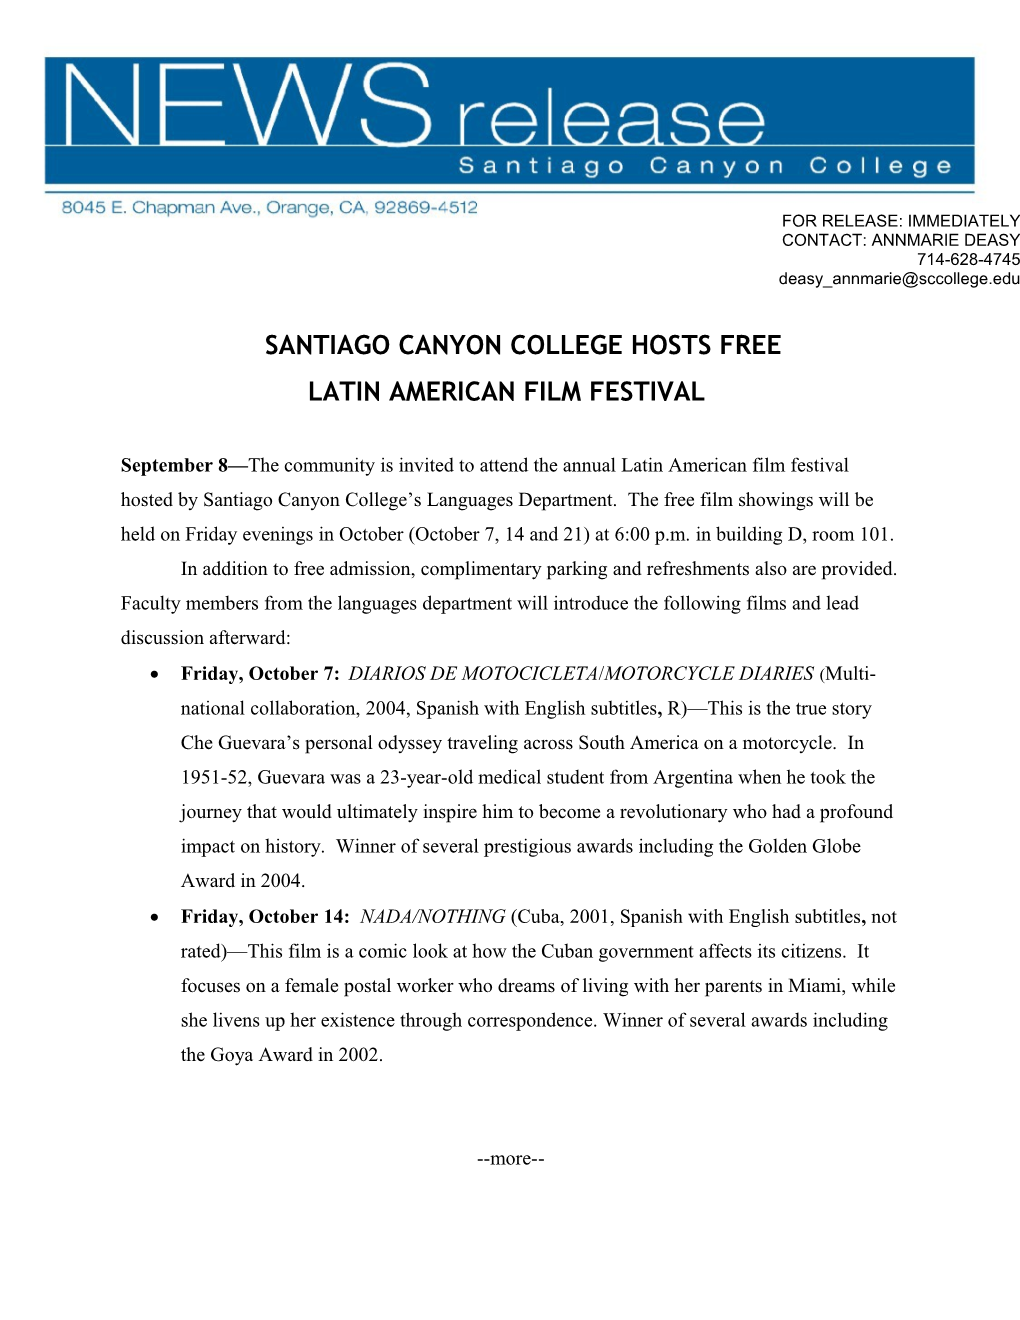 Santiago Canyon College Hosts Free Latin American Film Festival